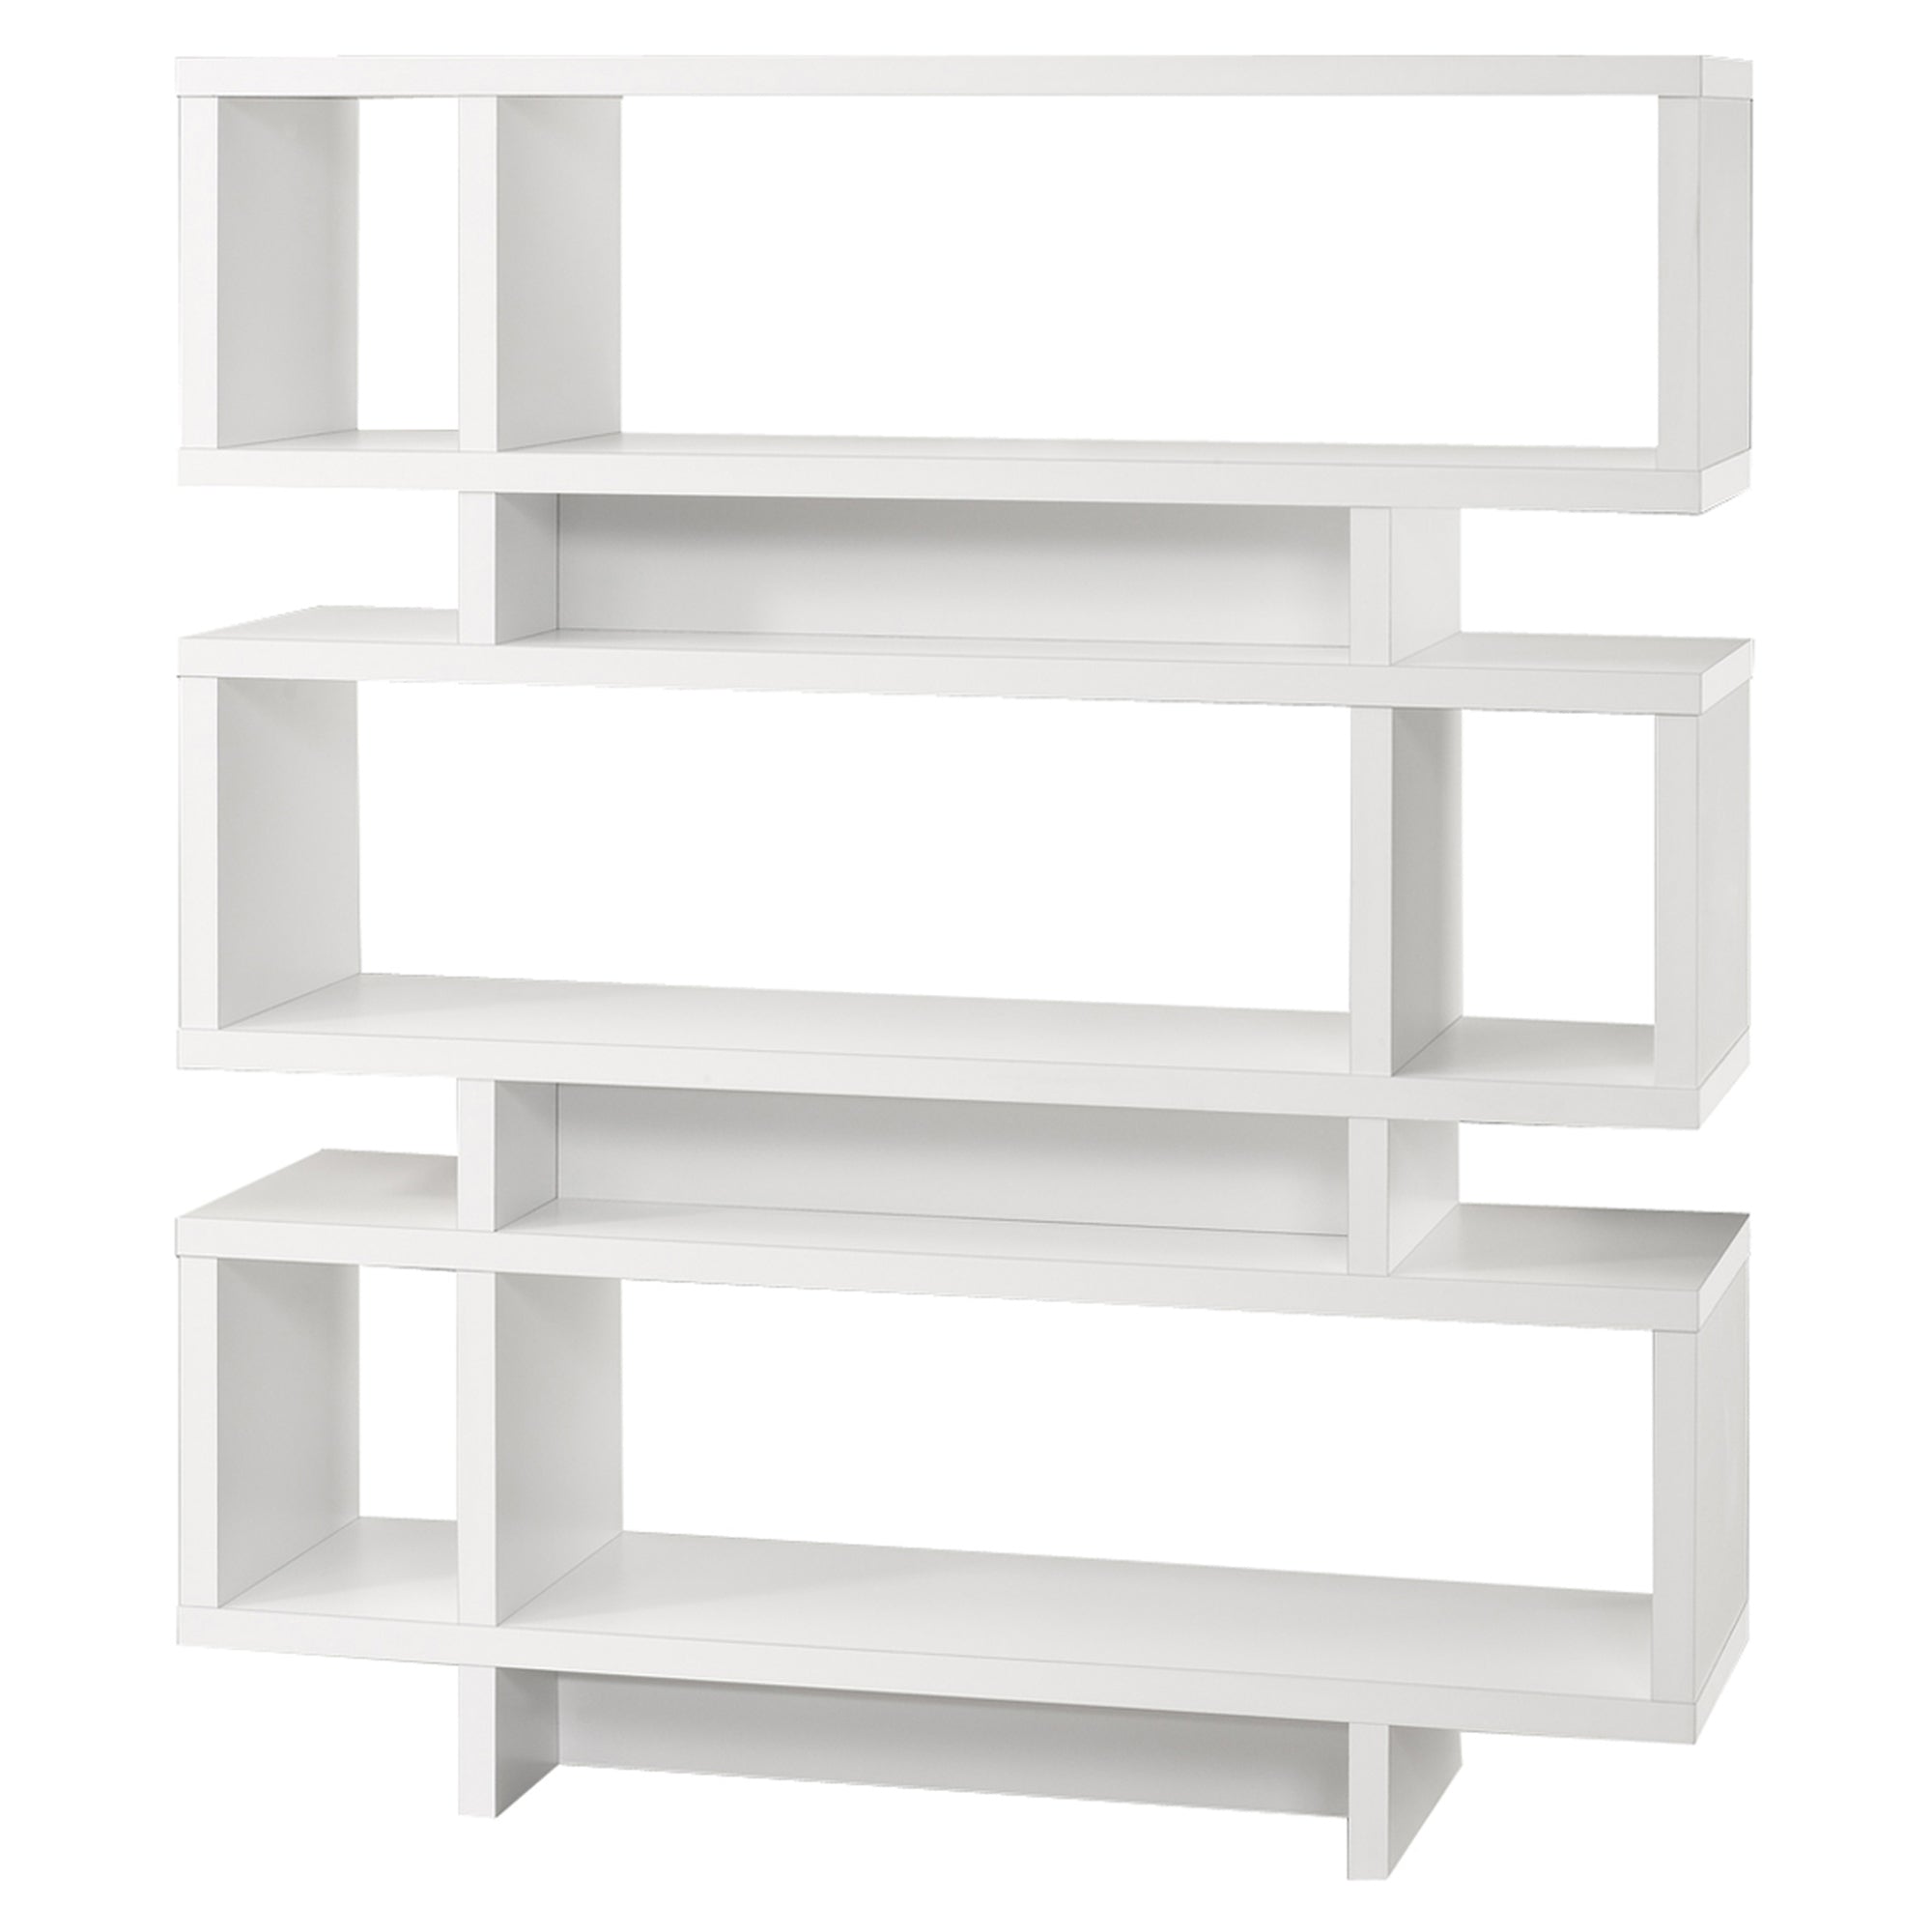 55" H 4 Tier Geomatrical Bookshelf Bookcase Etagere in White